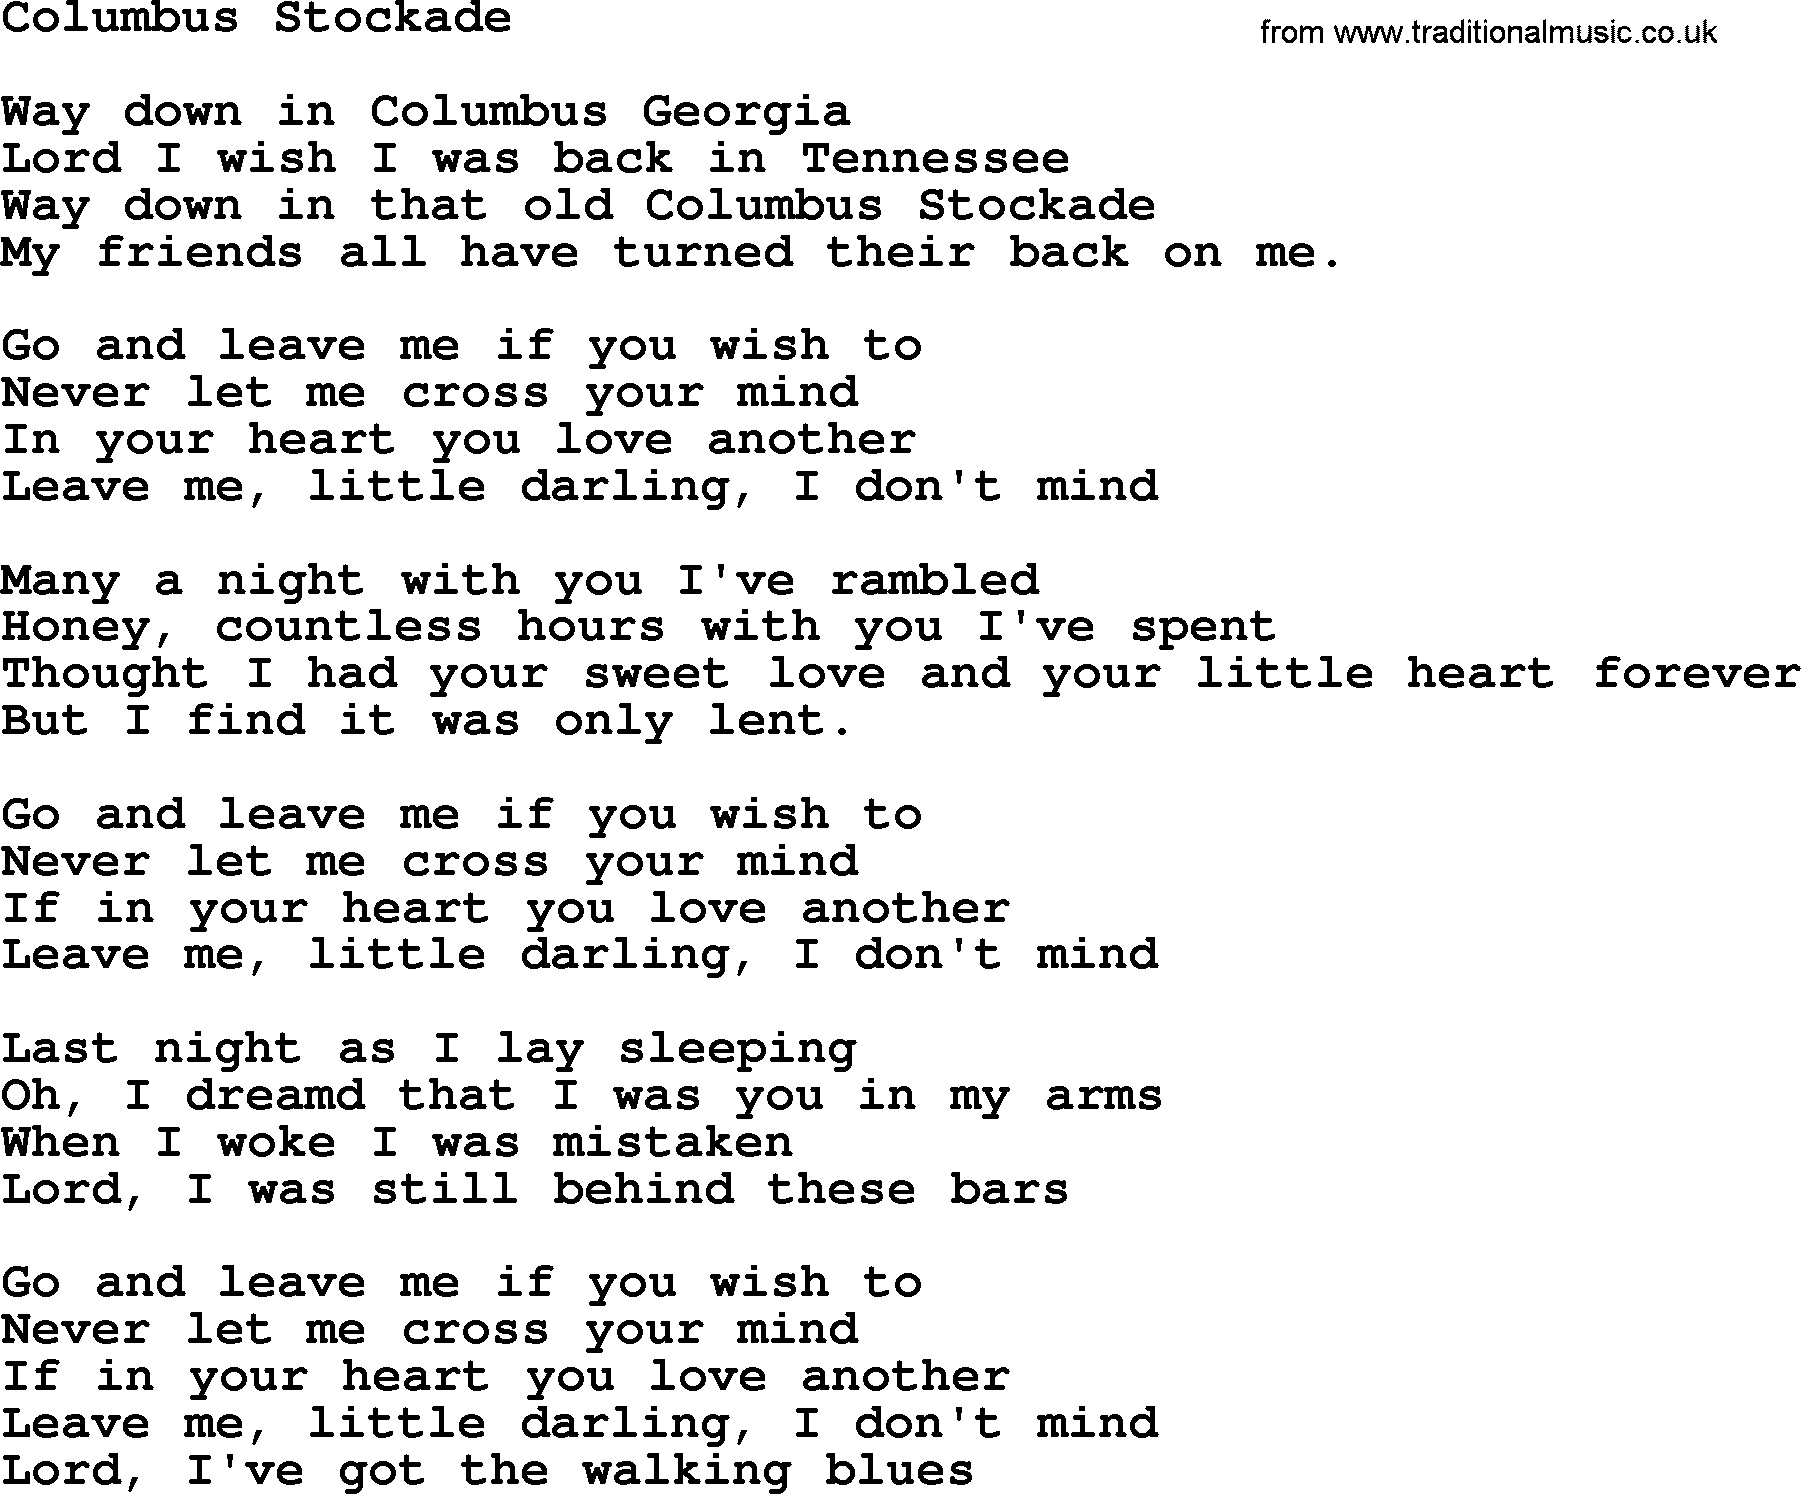 Woody Guthrie song Columbus Stockade lyrics